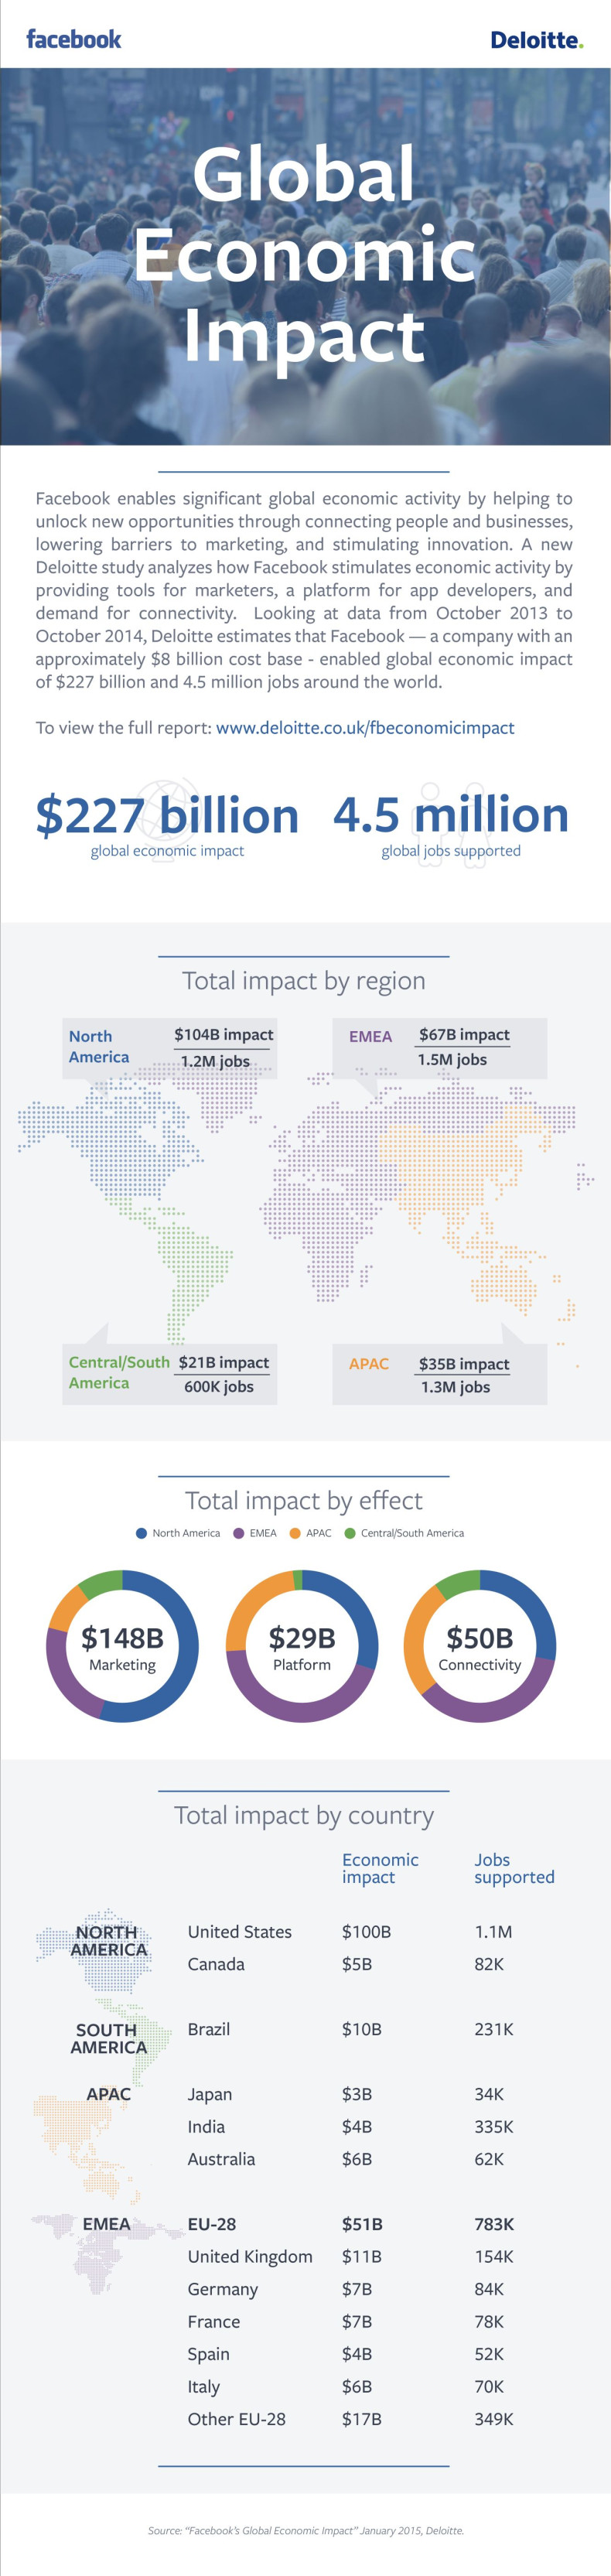 Facebook's global economic impact